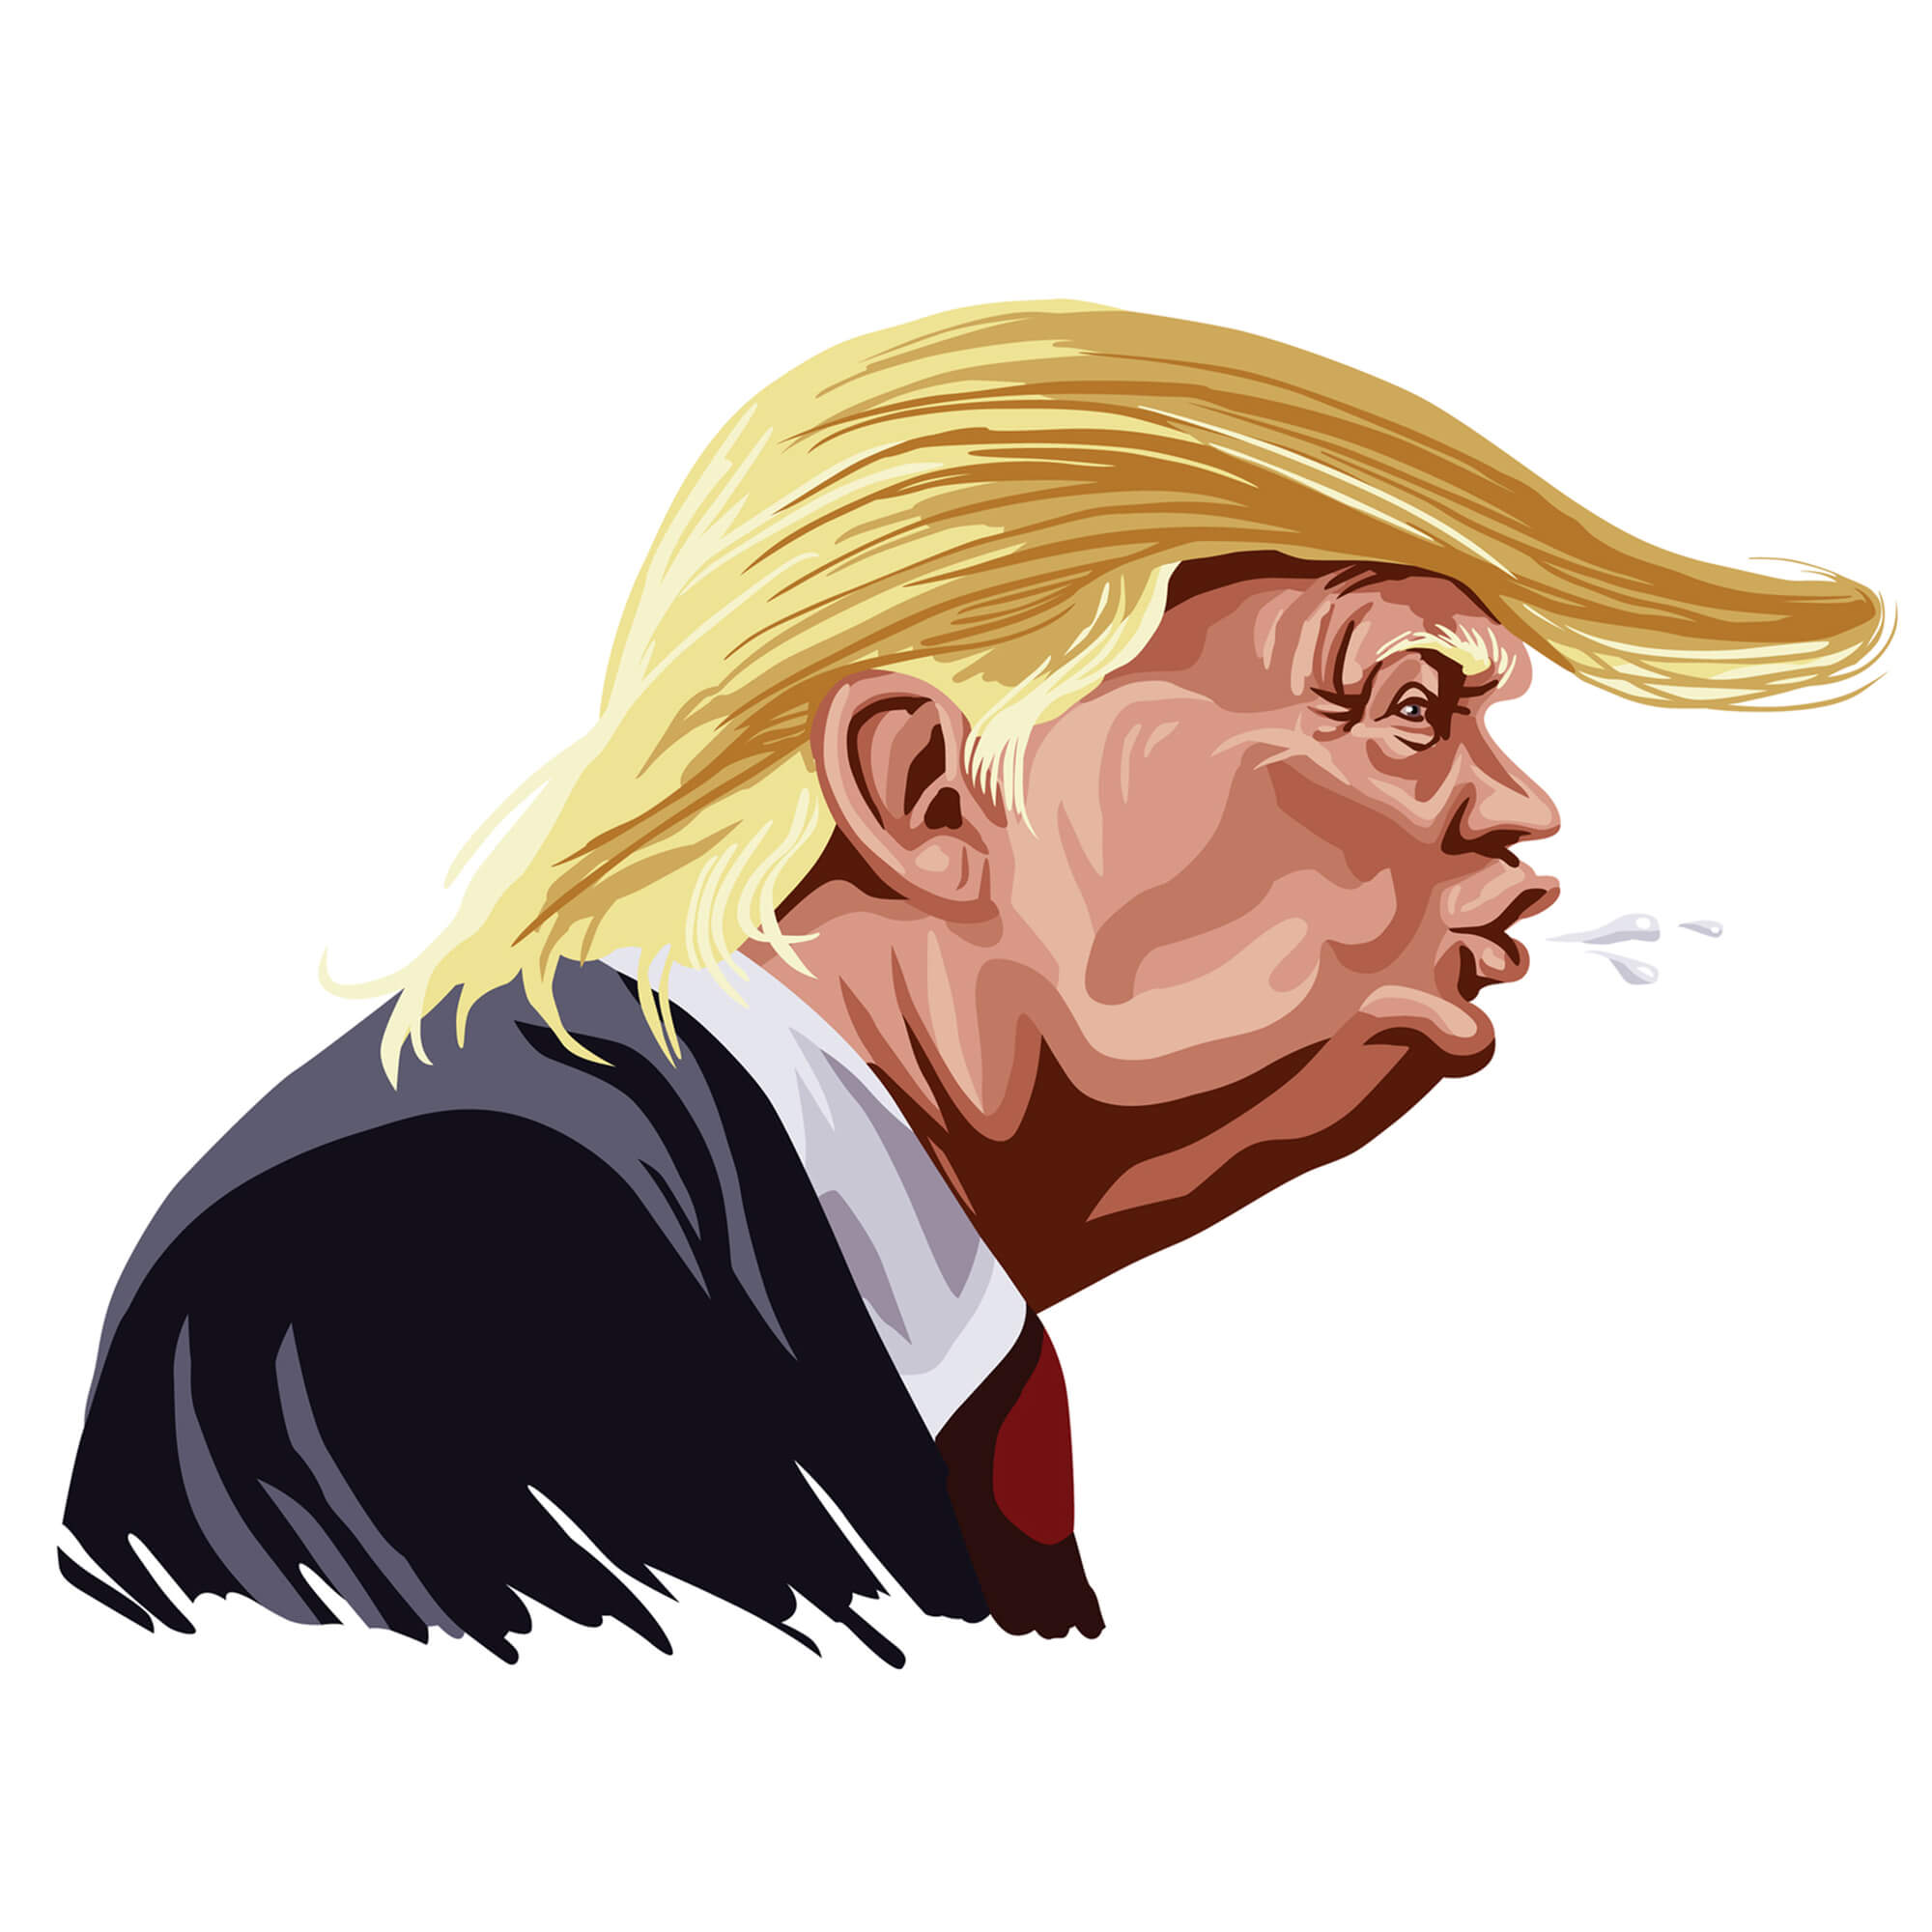 Former US President Donald Trump. Increased polarization. Illustration: depositphotos.com